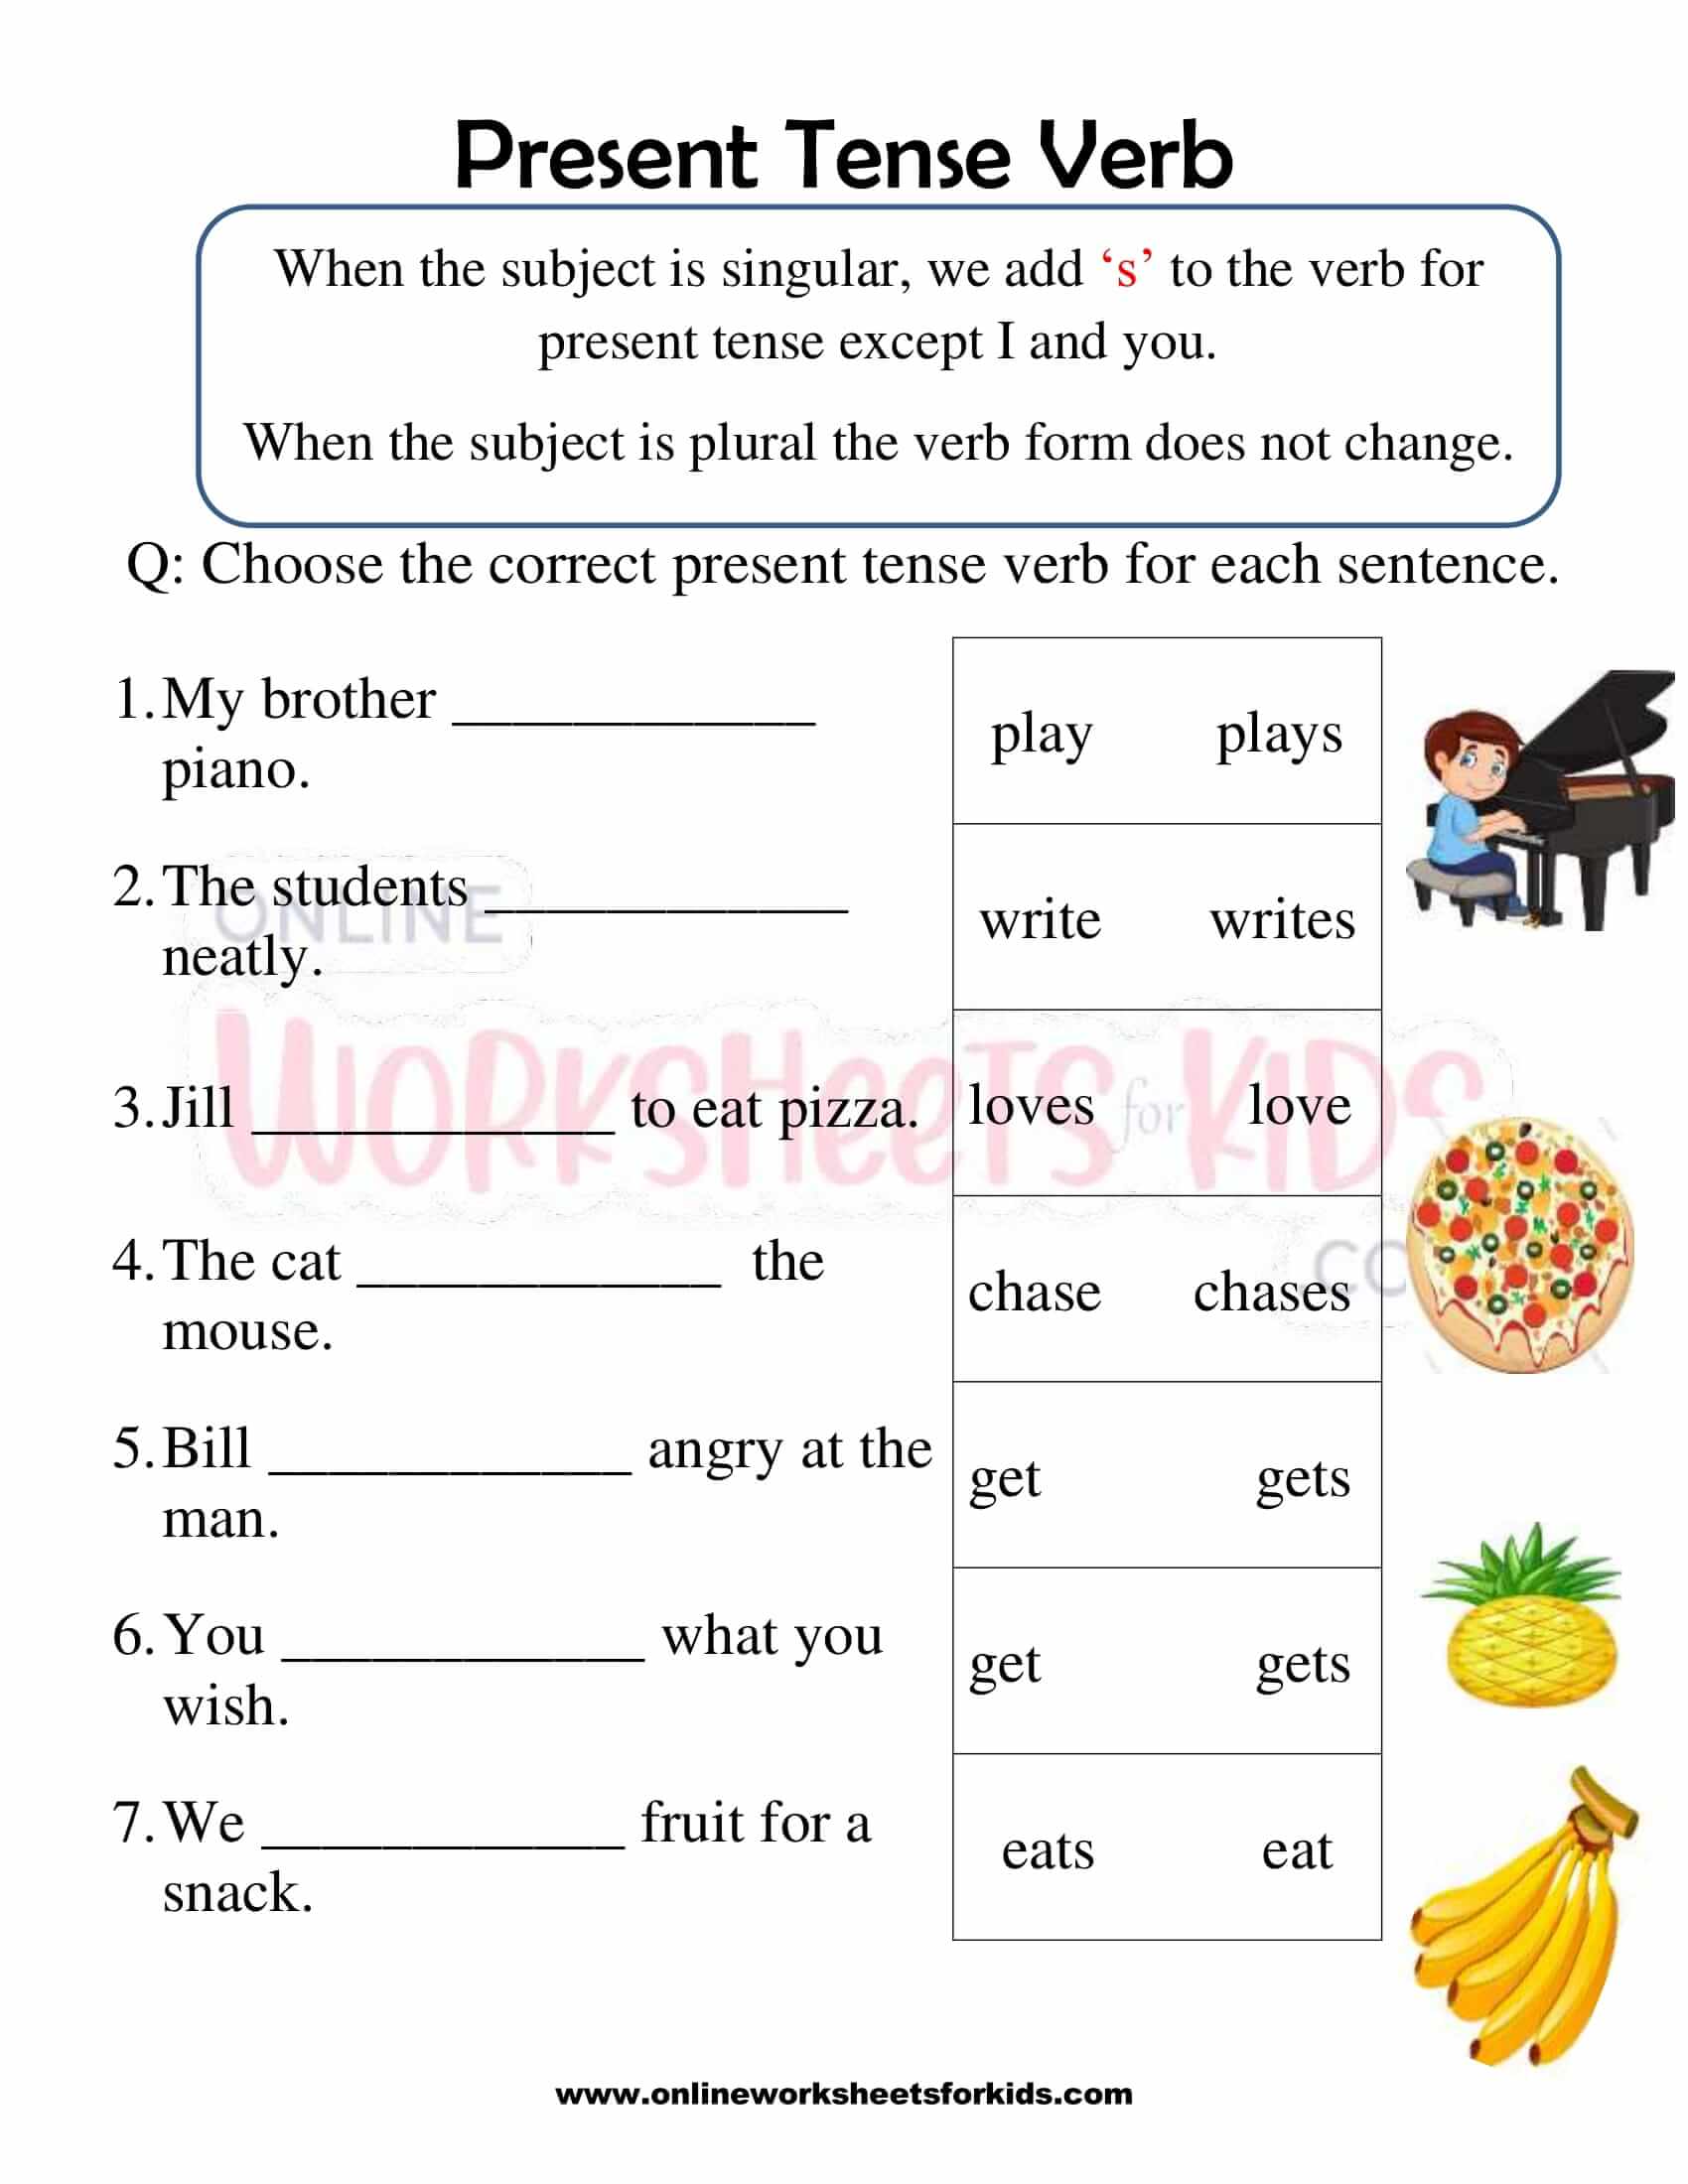 present-tense-verb-worksheet-1st-grade-7